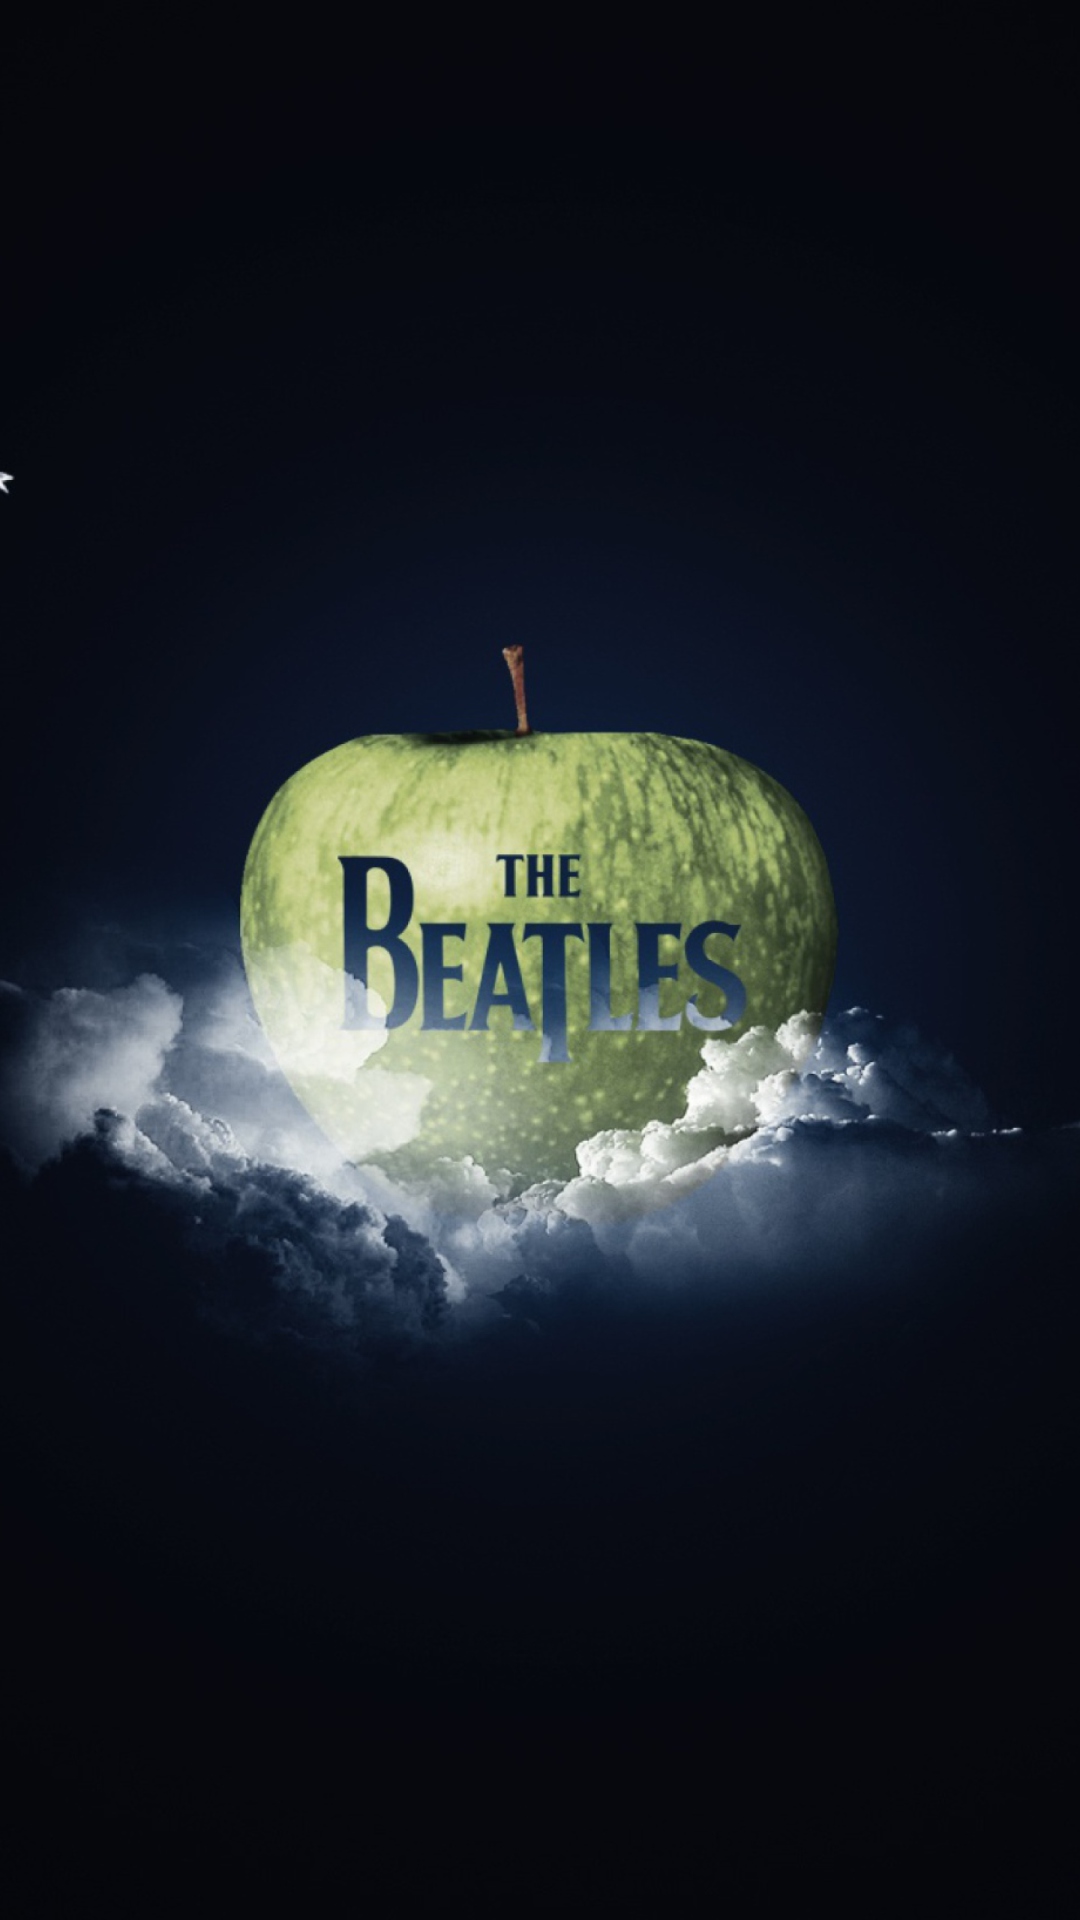 The Beatles Apple wallpaper 1080x1920